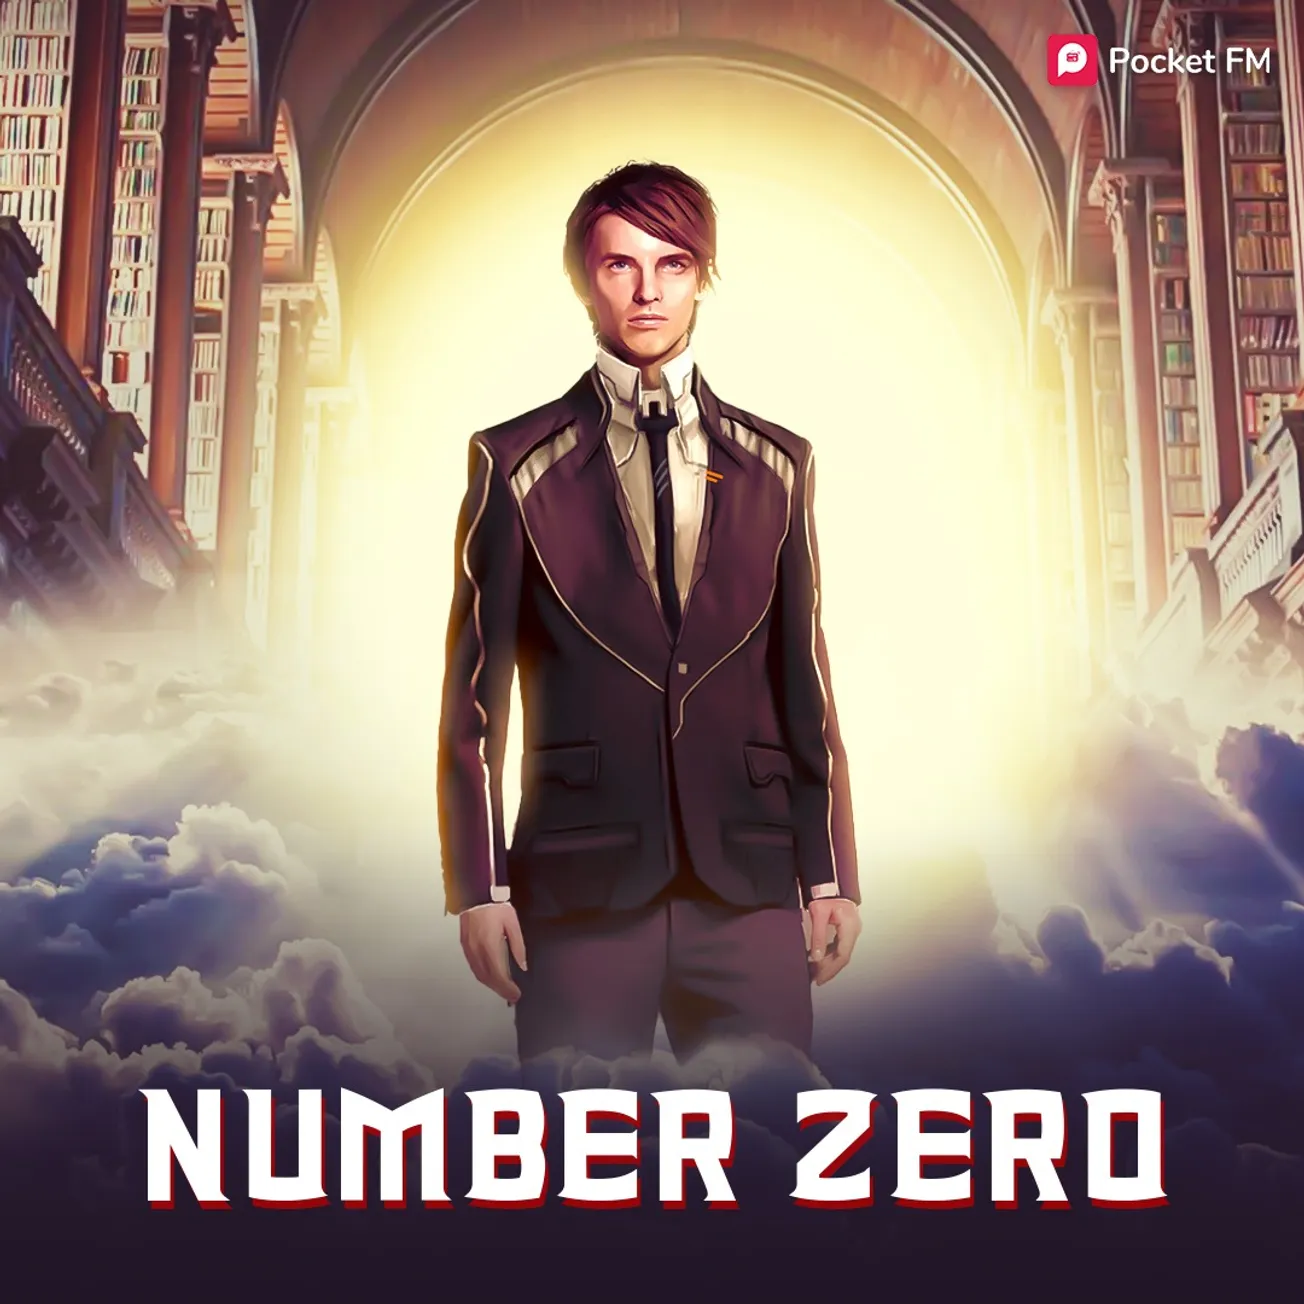 Number Zero (Pocket FM)